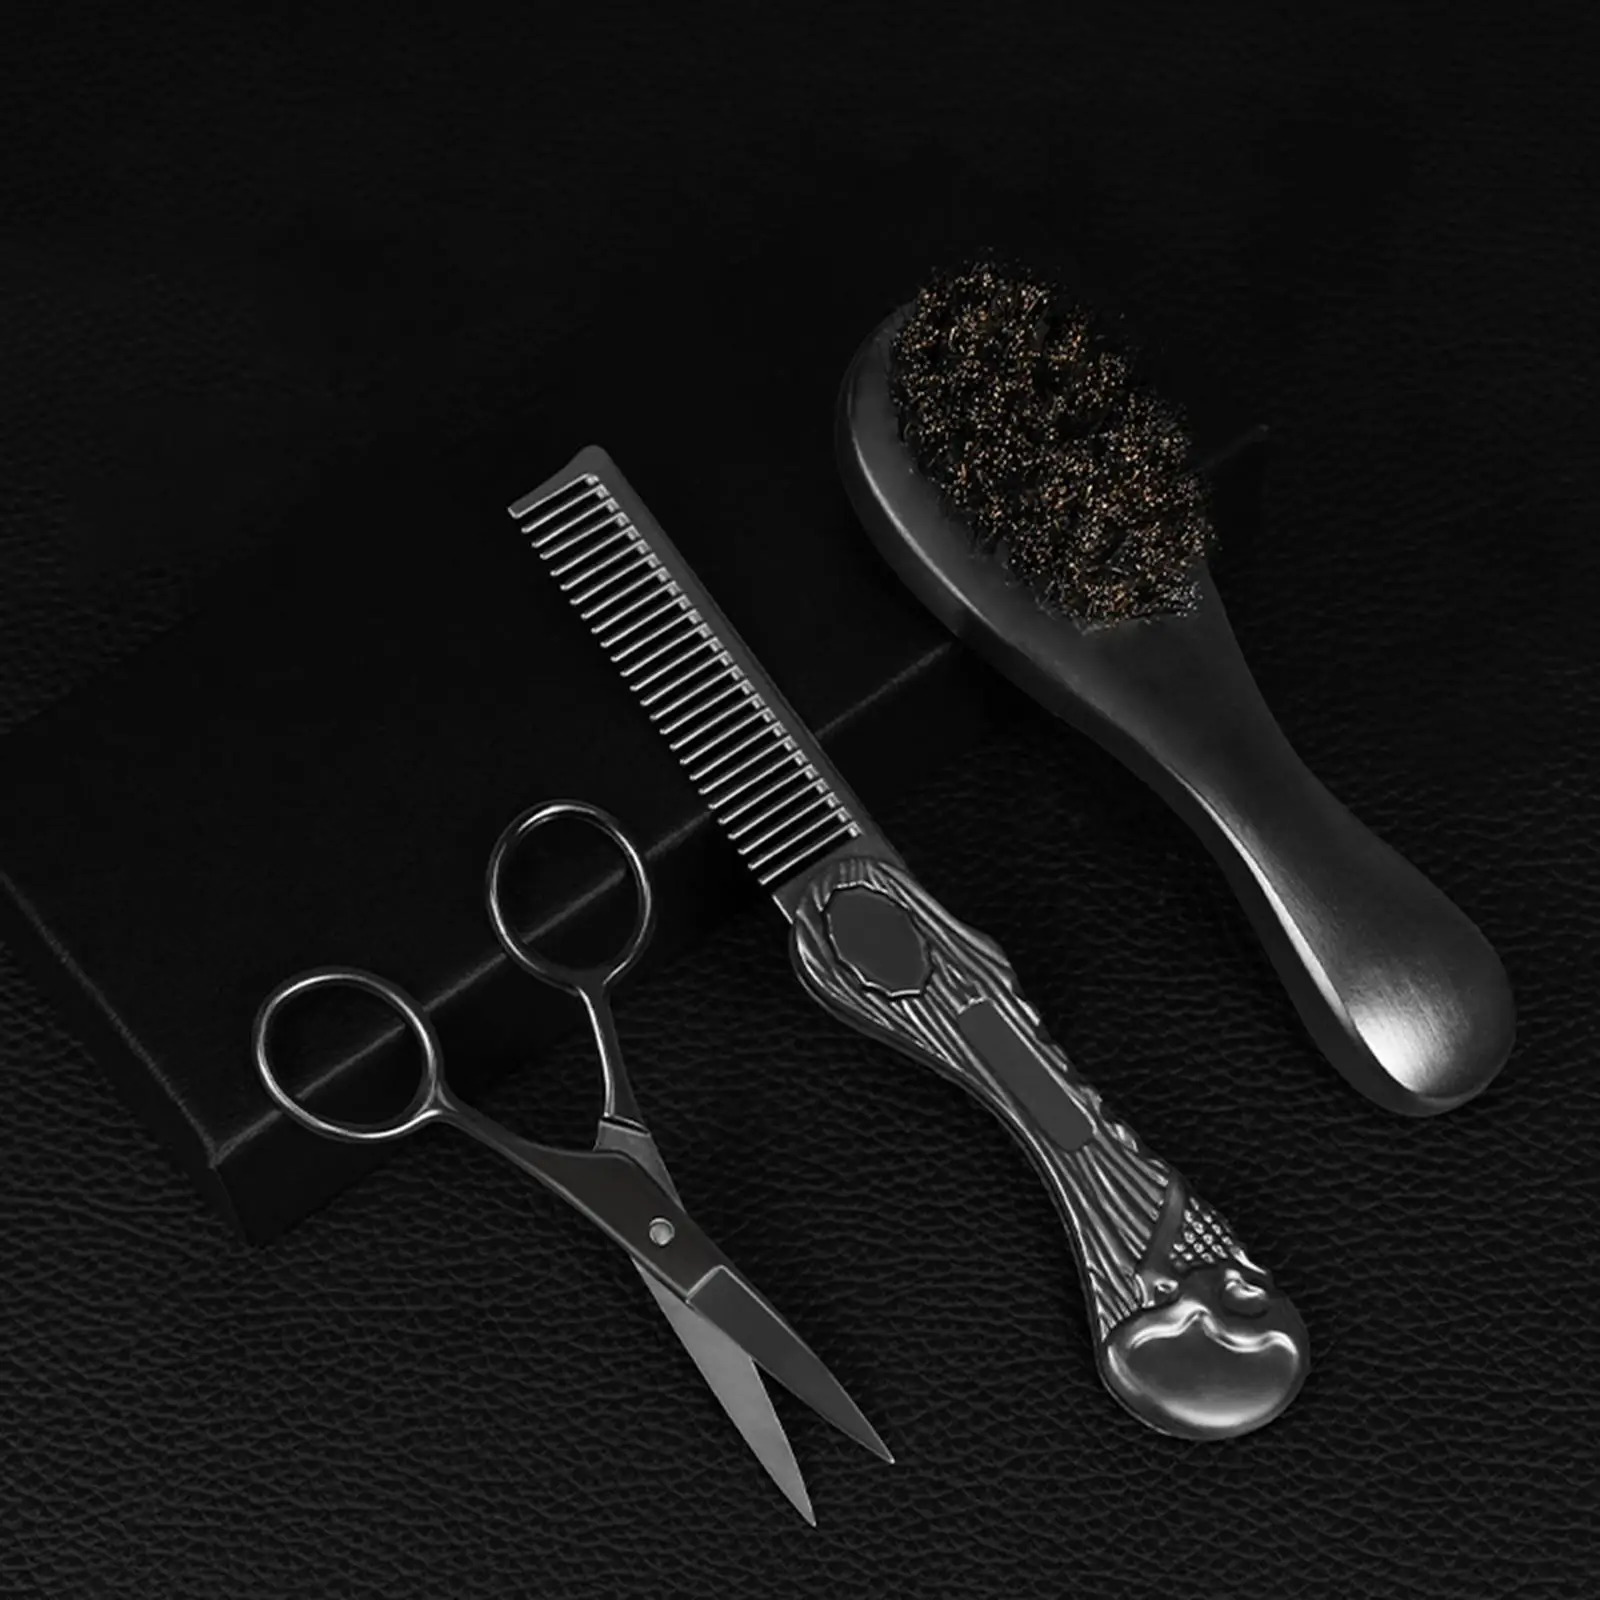 3Pcs Beard , Folding Comb for Men Cleaning Grooming Tool Beard Grooming